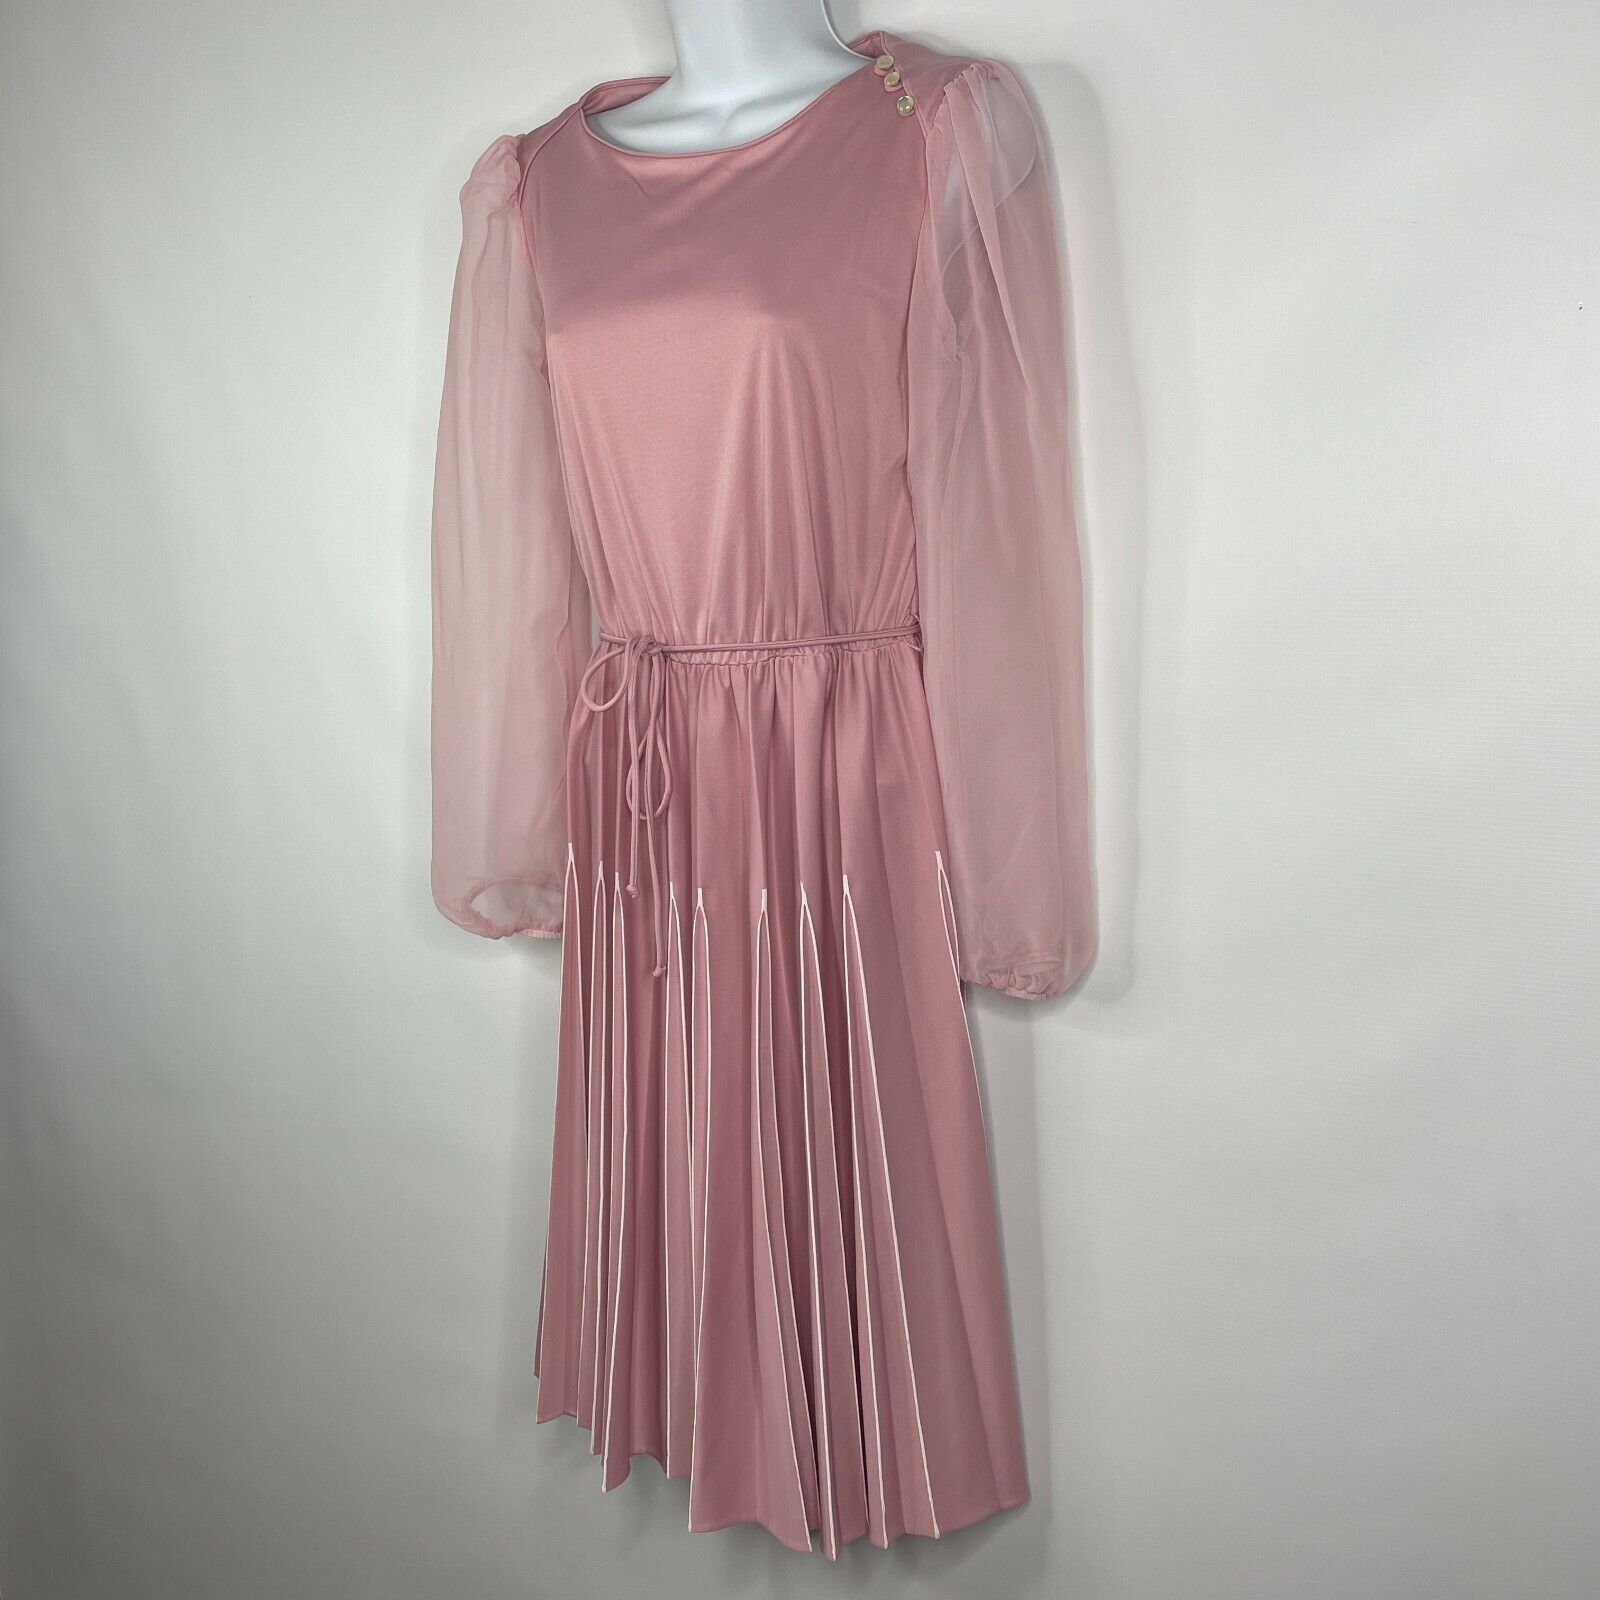 Vintage 70s Lavender Belted Contrast Stich Pleat Fit Flare Dress Size L / US 10 / IT 46 - 7 Thumbnail